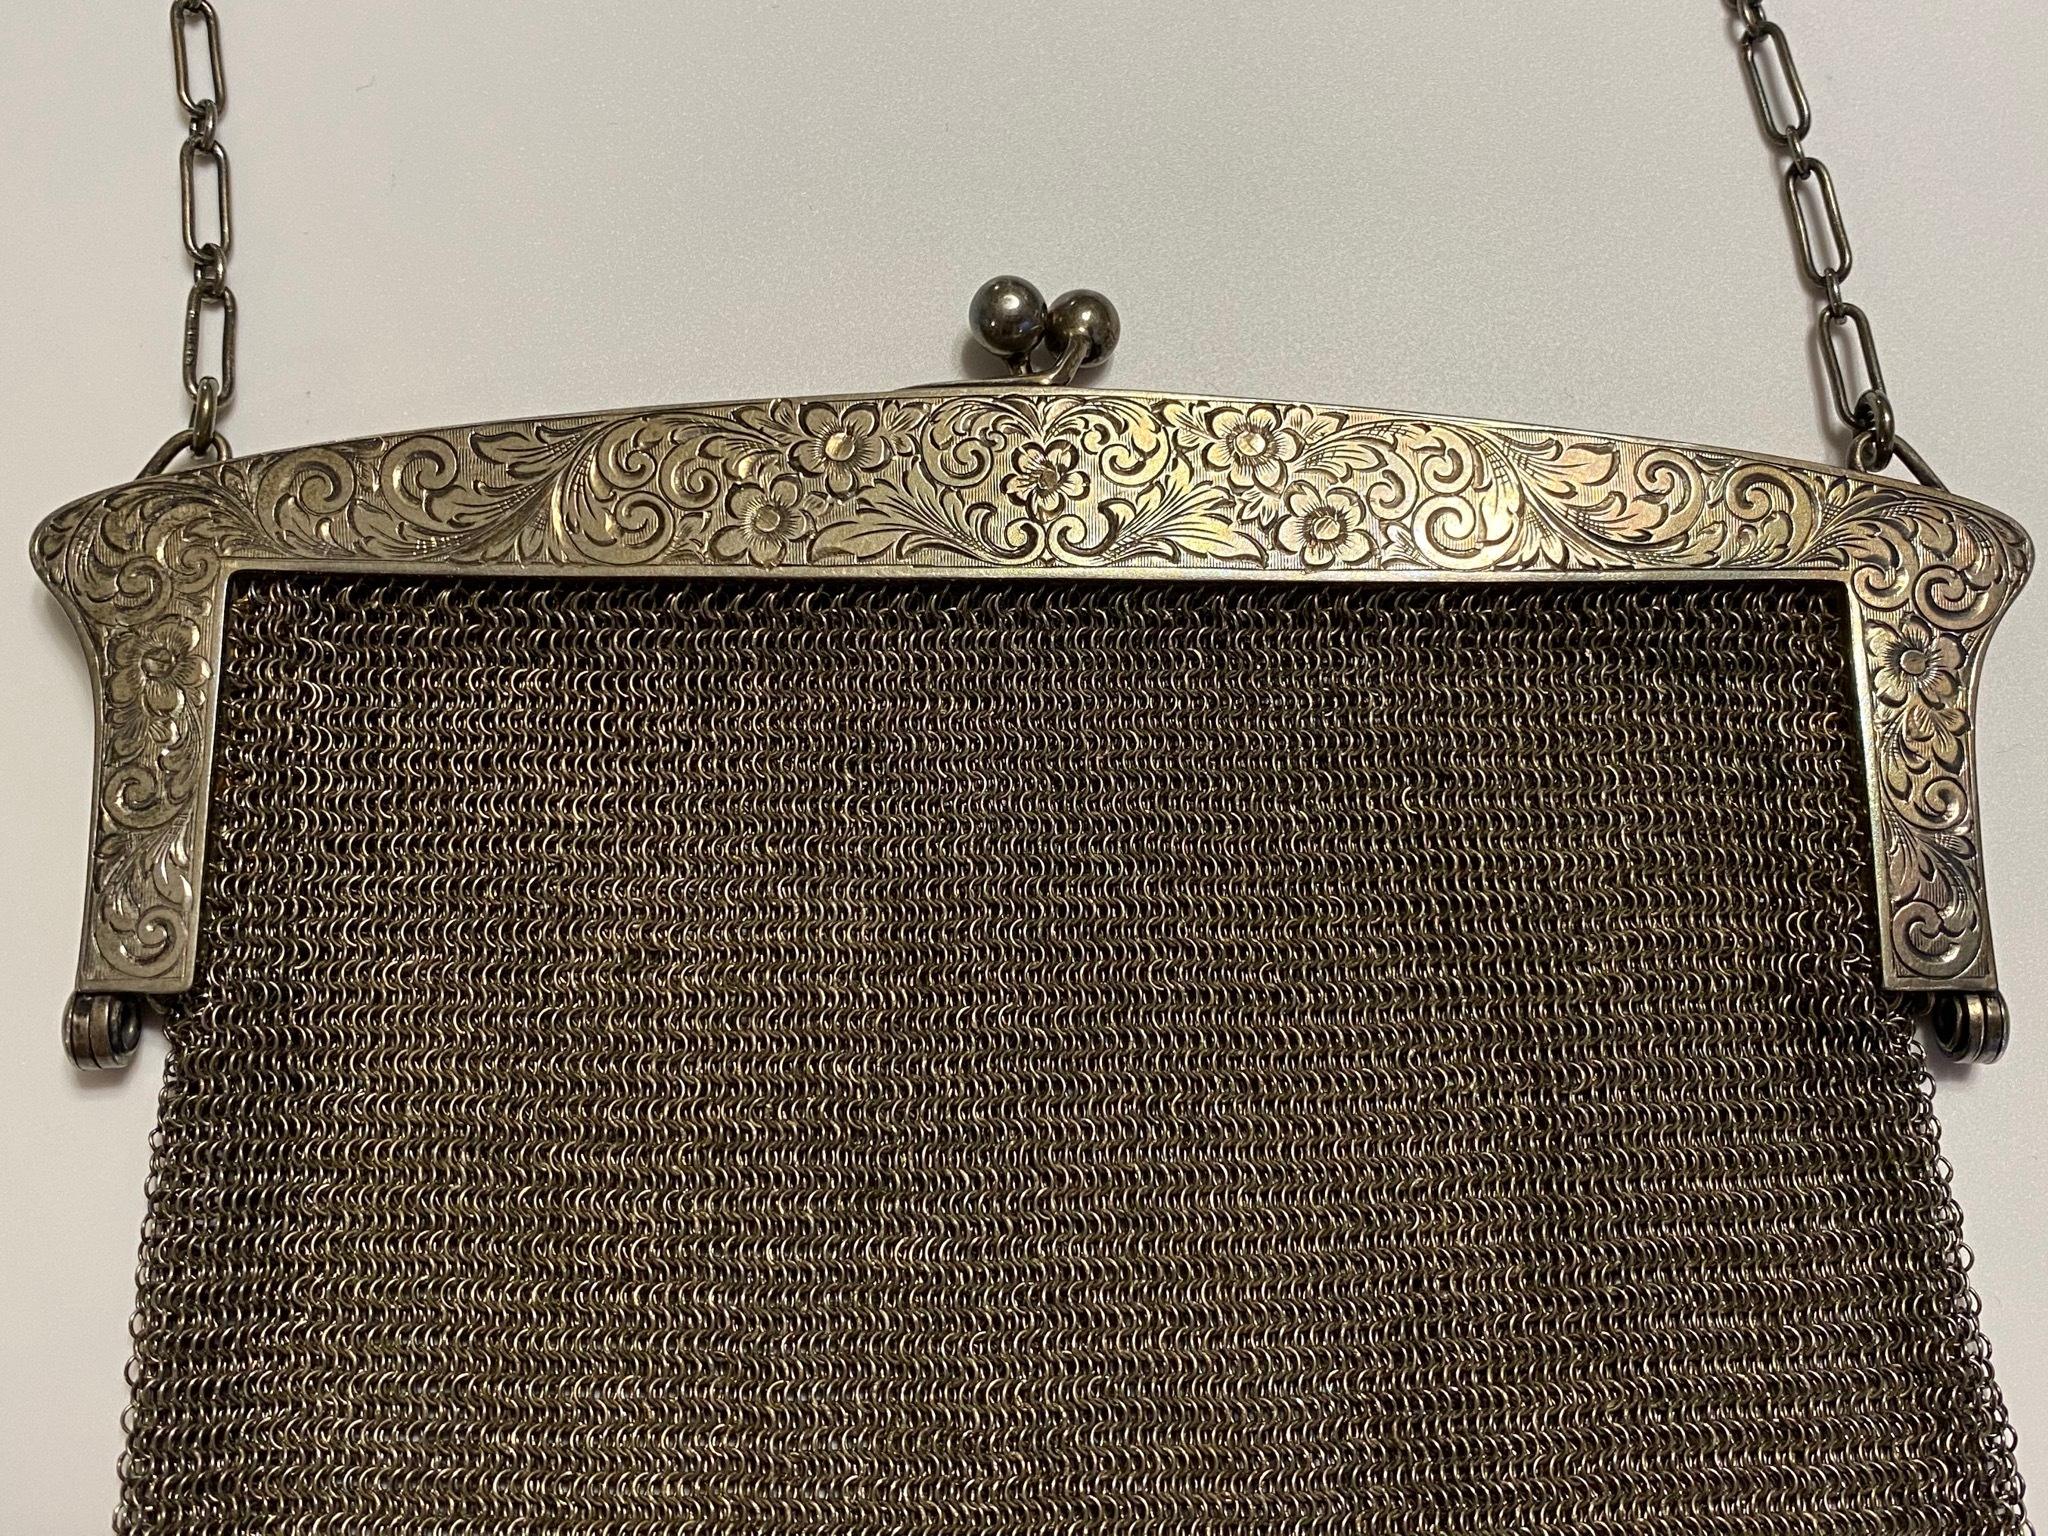 Edwardian Sterling Silver Mesh Handbag Purse Clutch. Marked: STERLING, L.S. Approx. size: 6.5